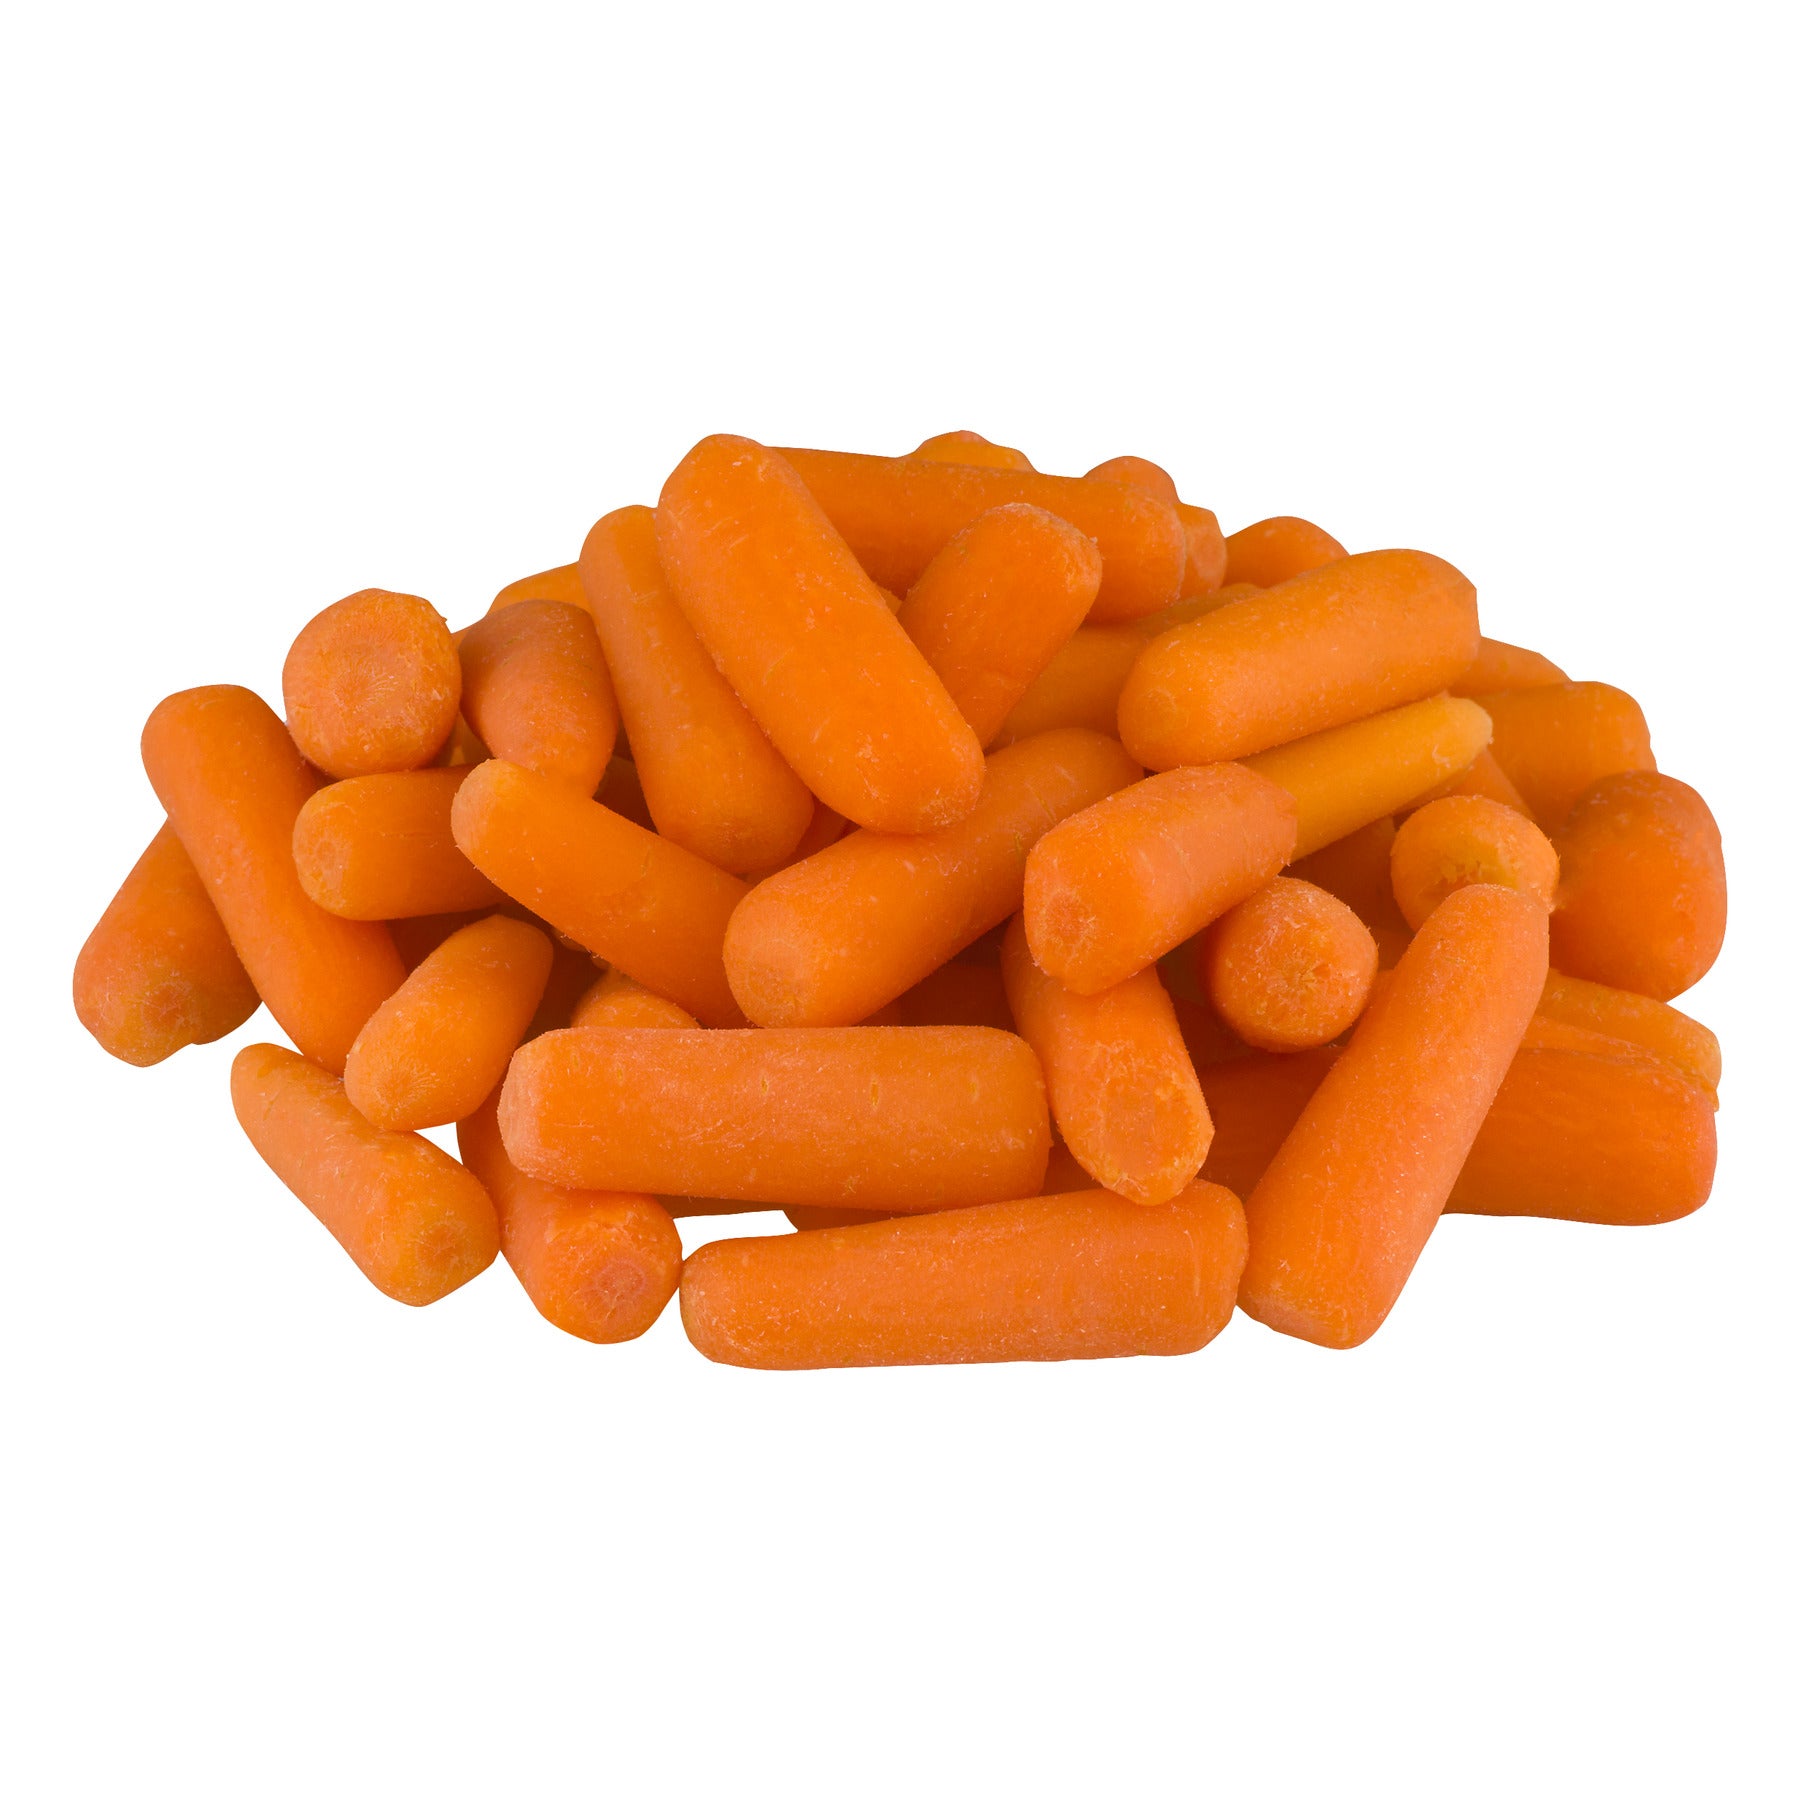 Baby Carrots - Petite Peeled - 1 pound